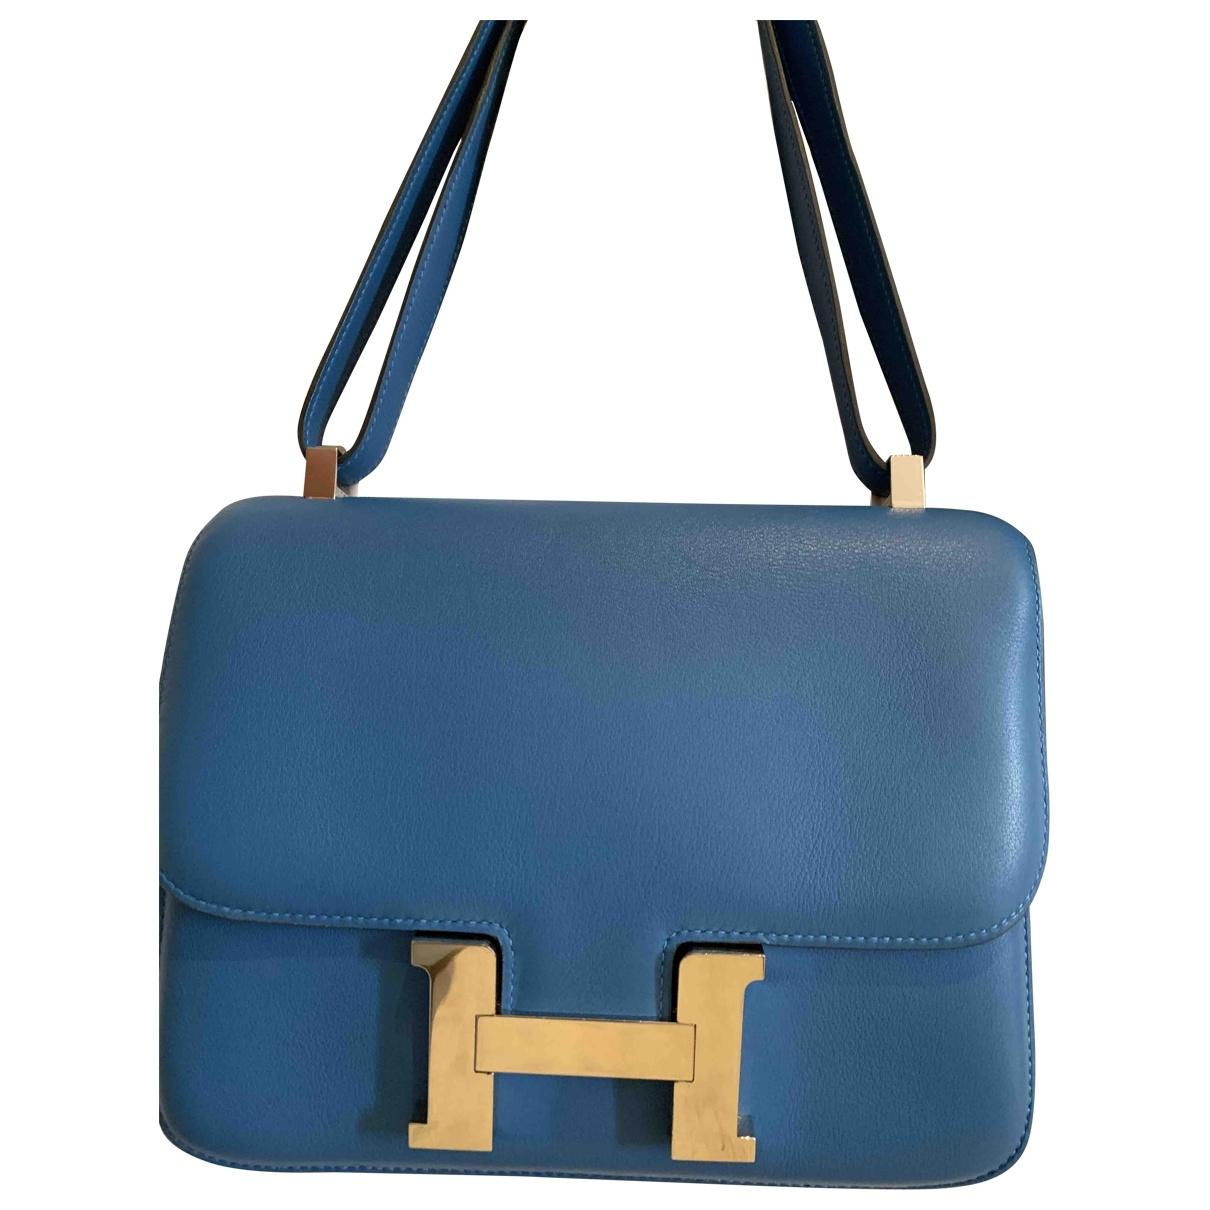 Hermès Constance Leather Crossbody Bag in Blue - Lyst